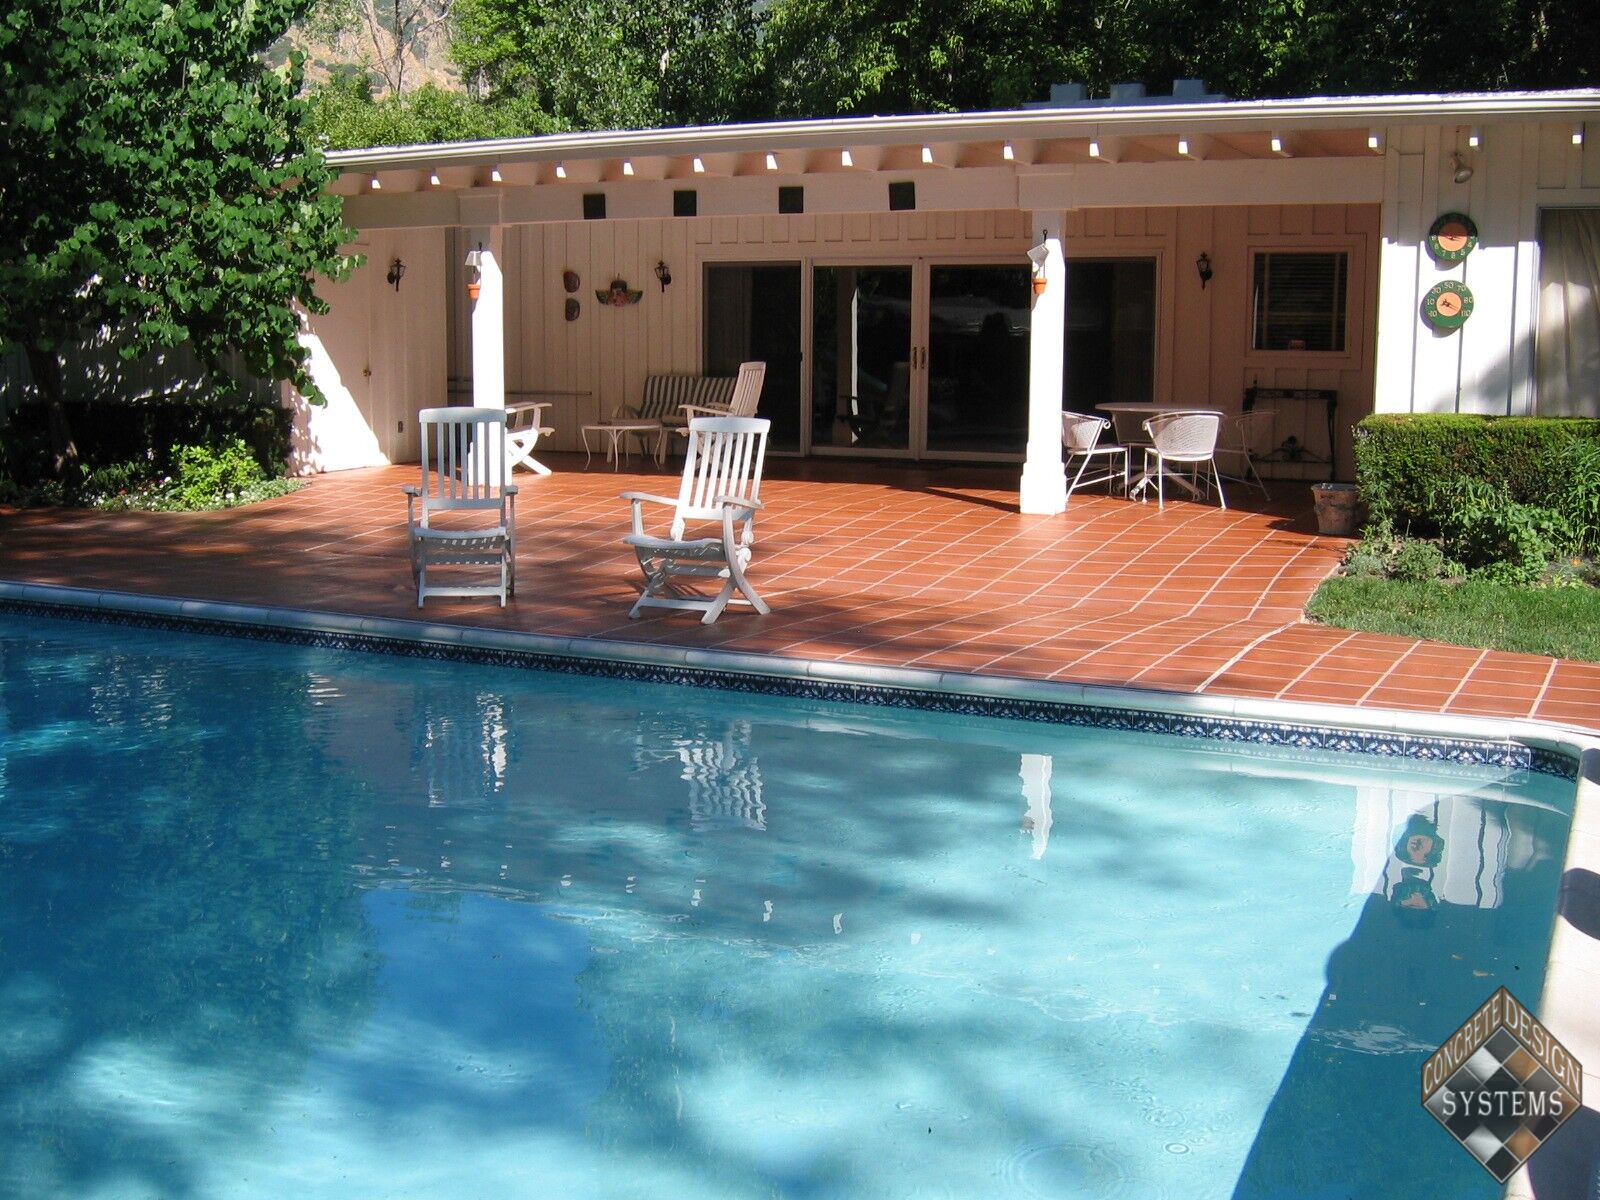 Pool Deck Mexican Tile Overlay - Concrete Design Systems - Salt Lake